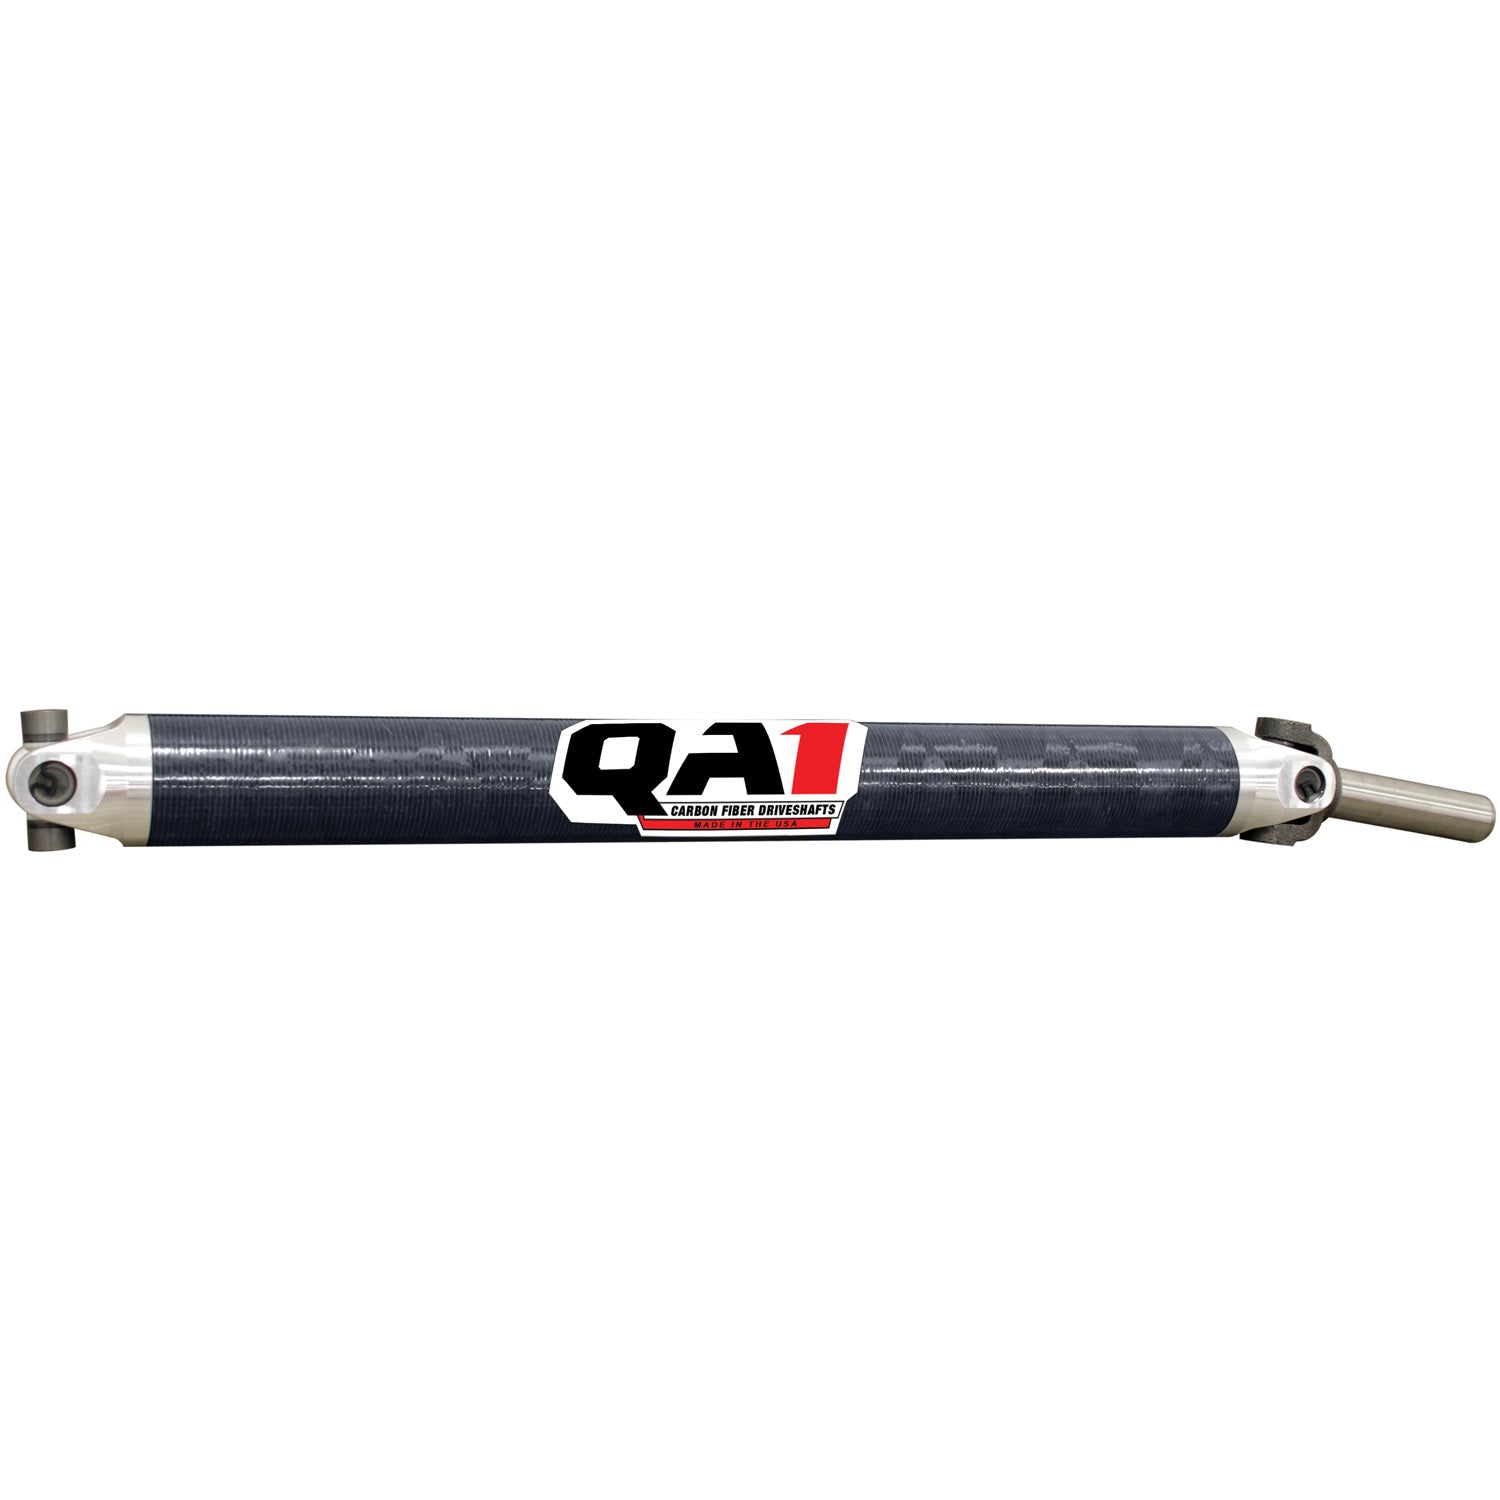 QA1 JJ-11228 Driveshaft, Cf, Ct-Dirt LM, Sy 38.50 XM 3.2, 1310 U-Joint, Gm 27Sp, 8